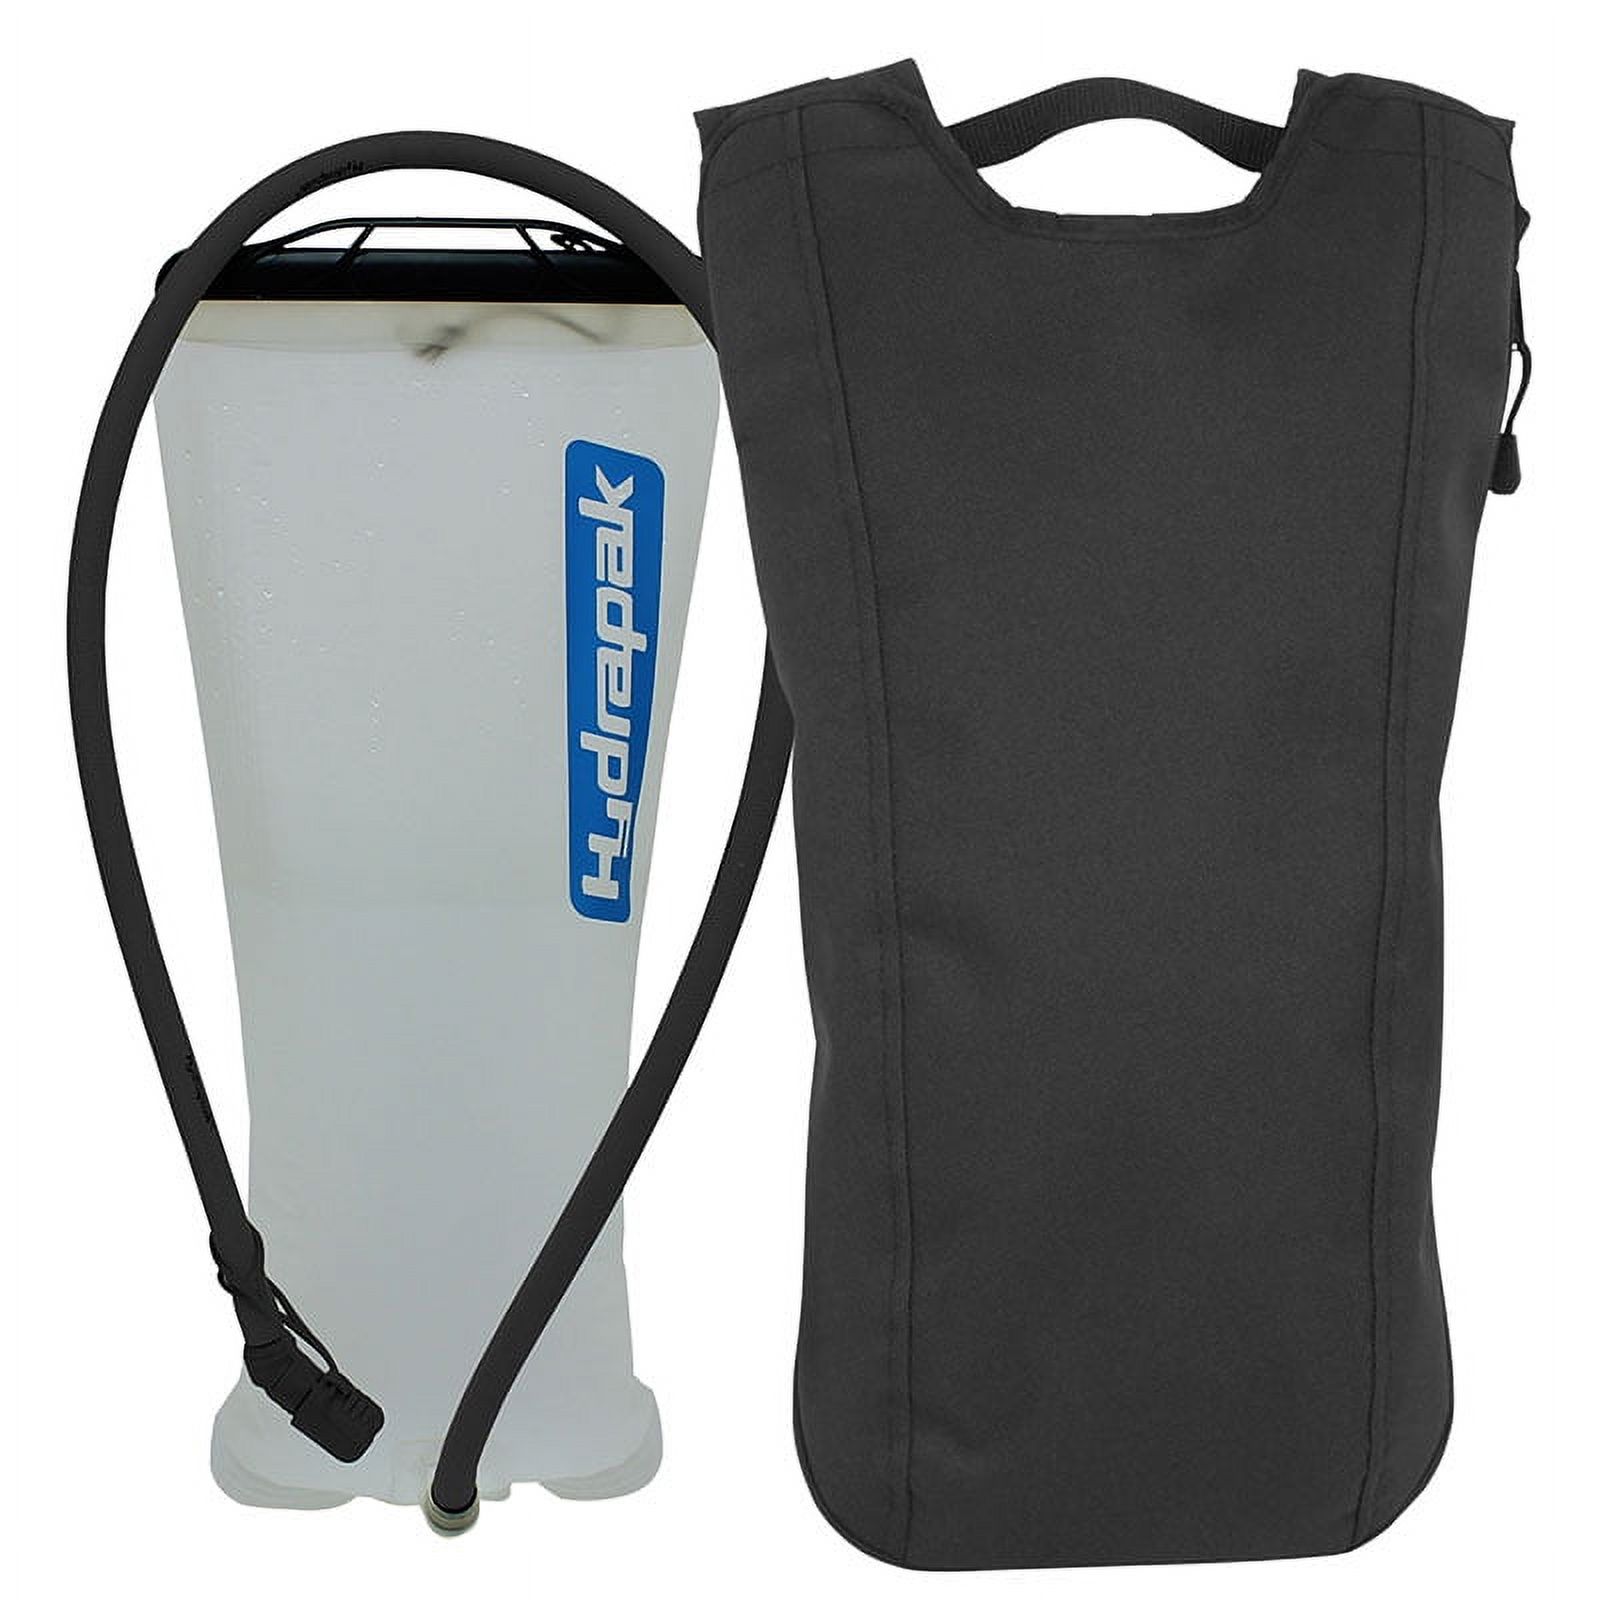 Mercury Tactical Hydrapak Backpack, Black - image 1 of 1